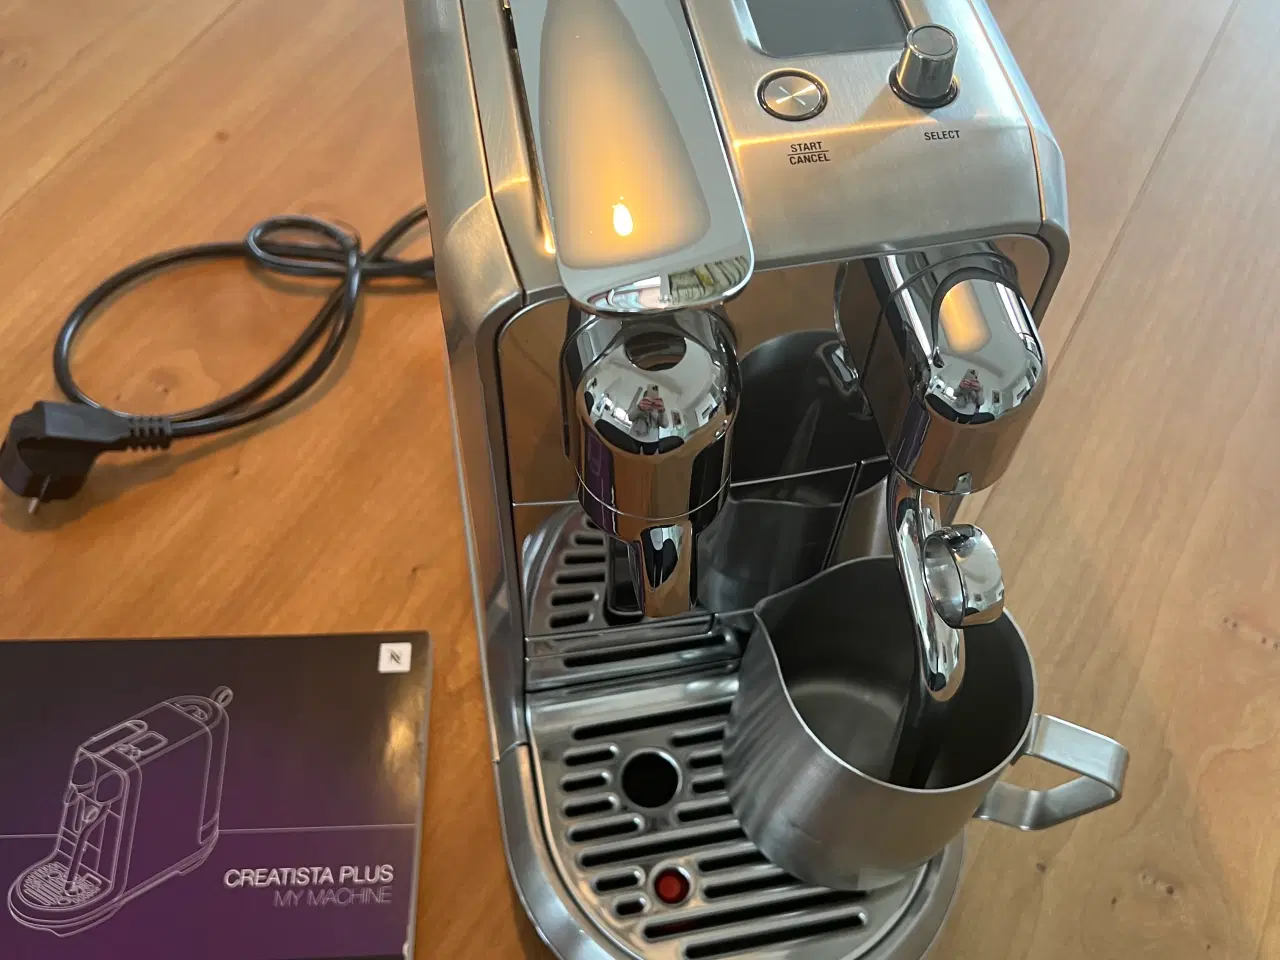 Billede 4 - Flot Nespresso Creatista Plus kaspslekaffemaskine